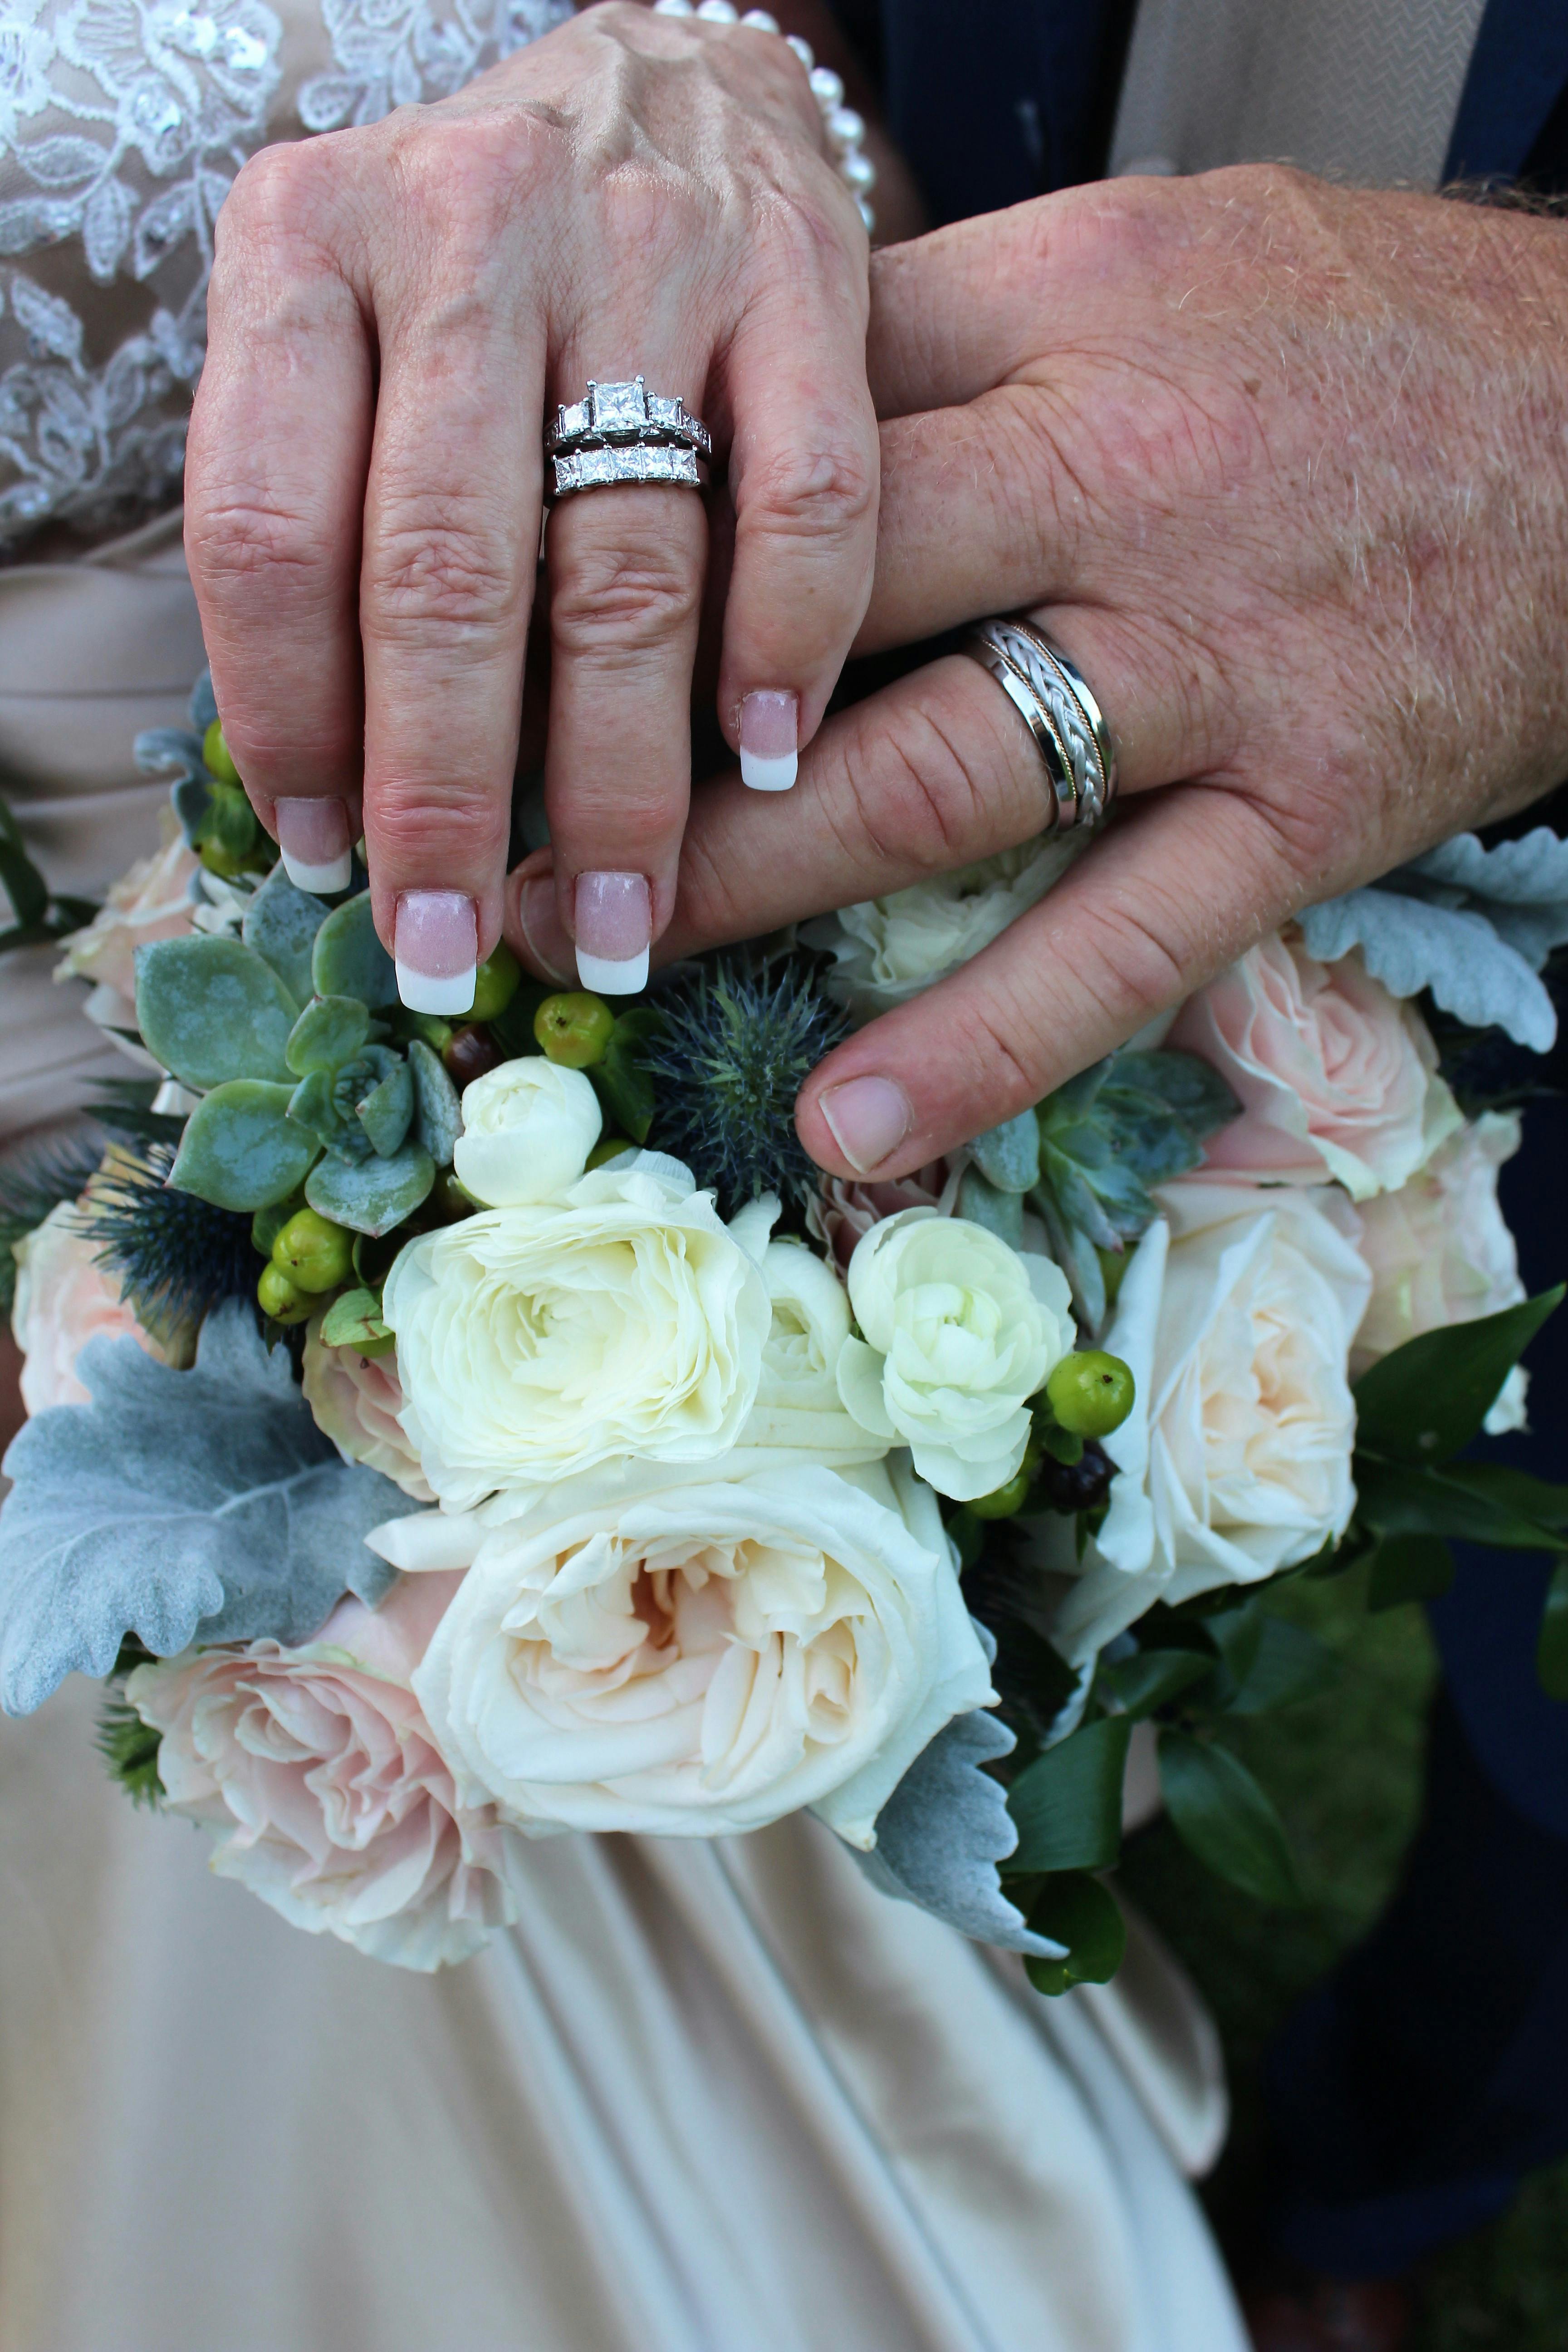 Free stock photo of beautiful flowers, wedding bands, wedding bouquet